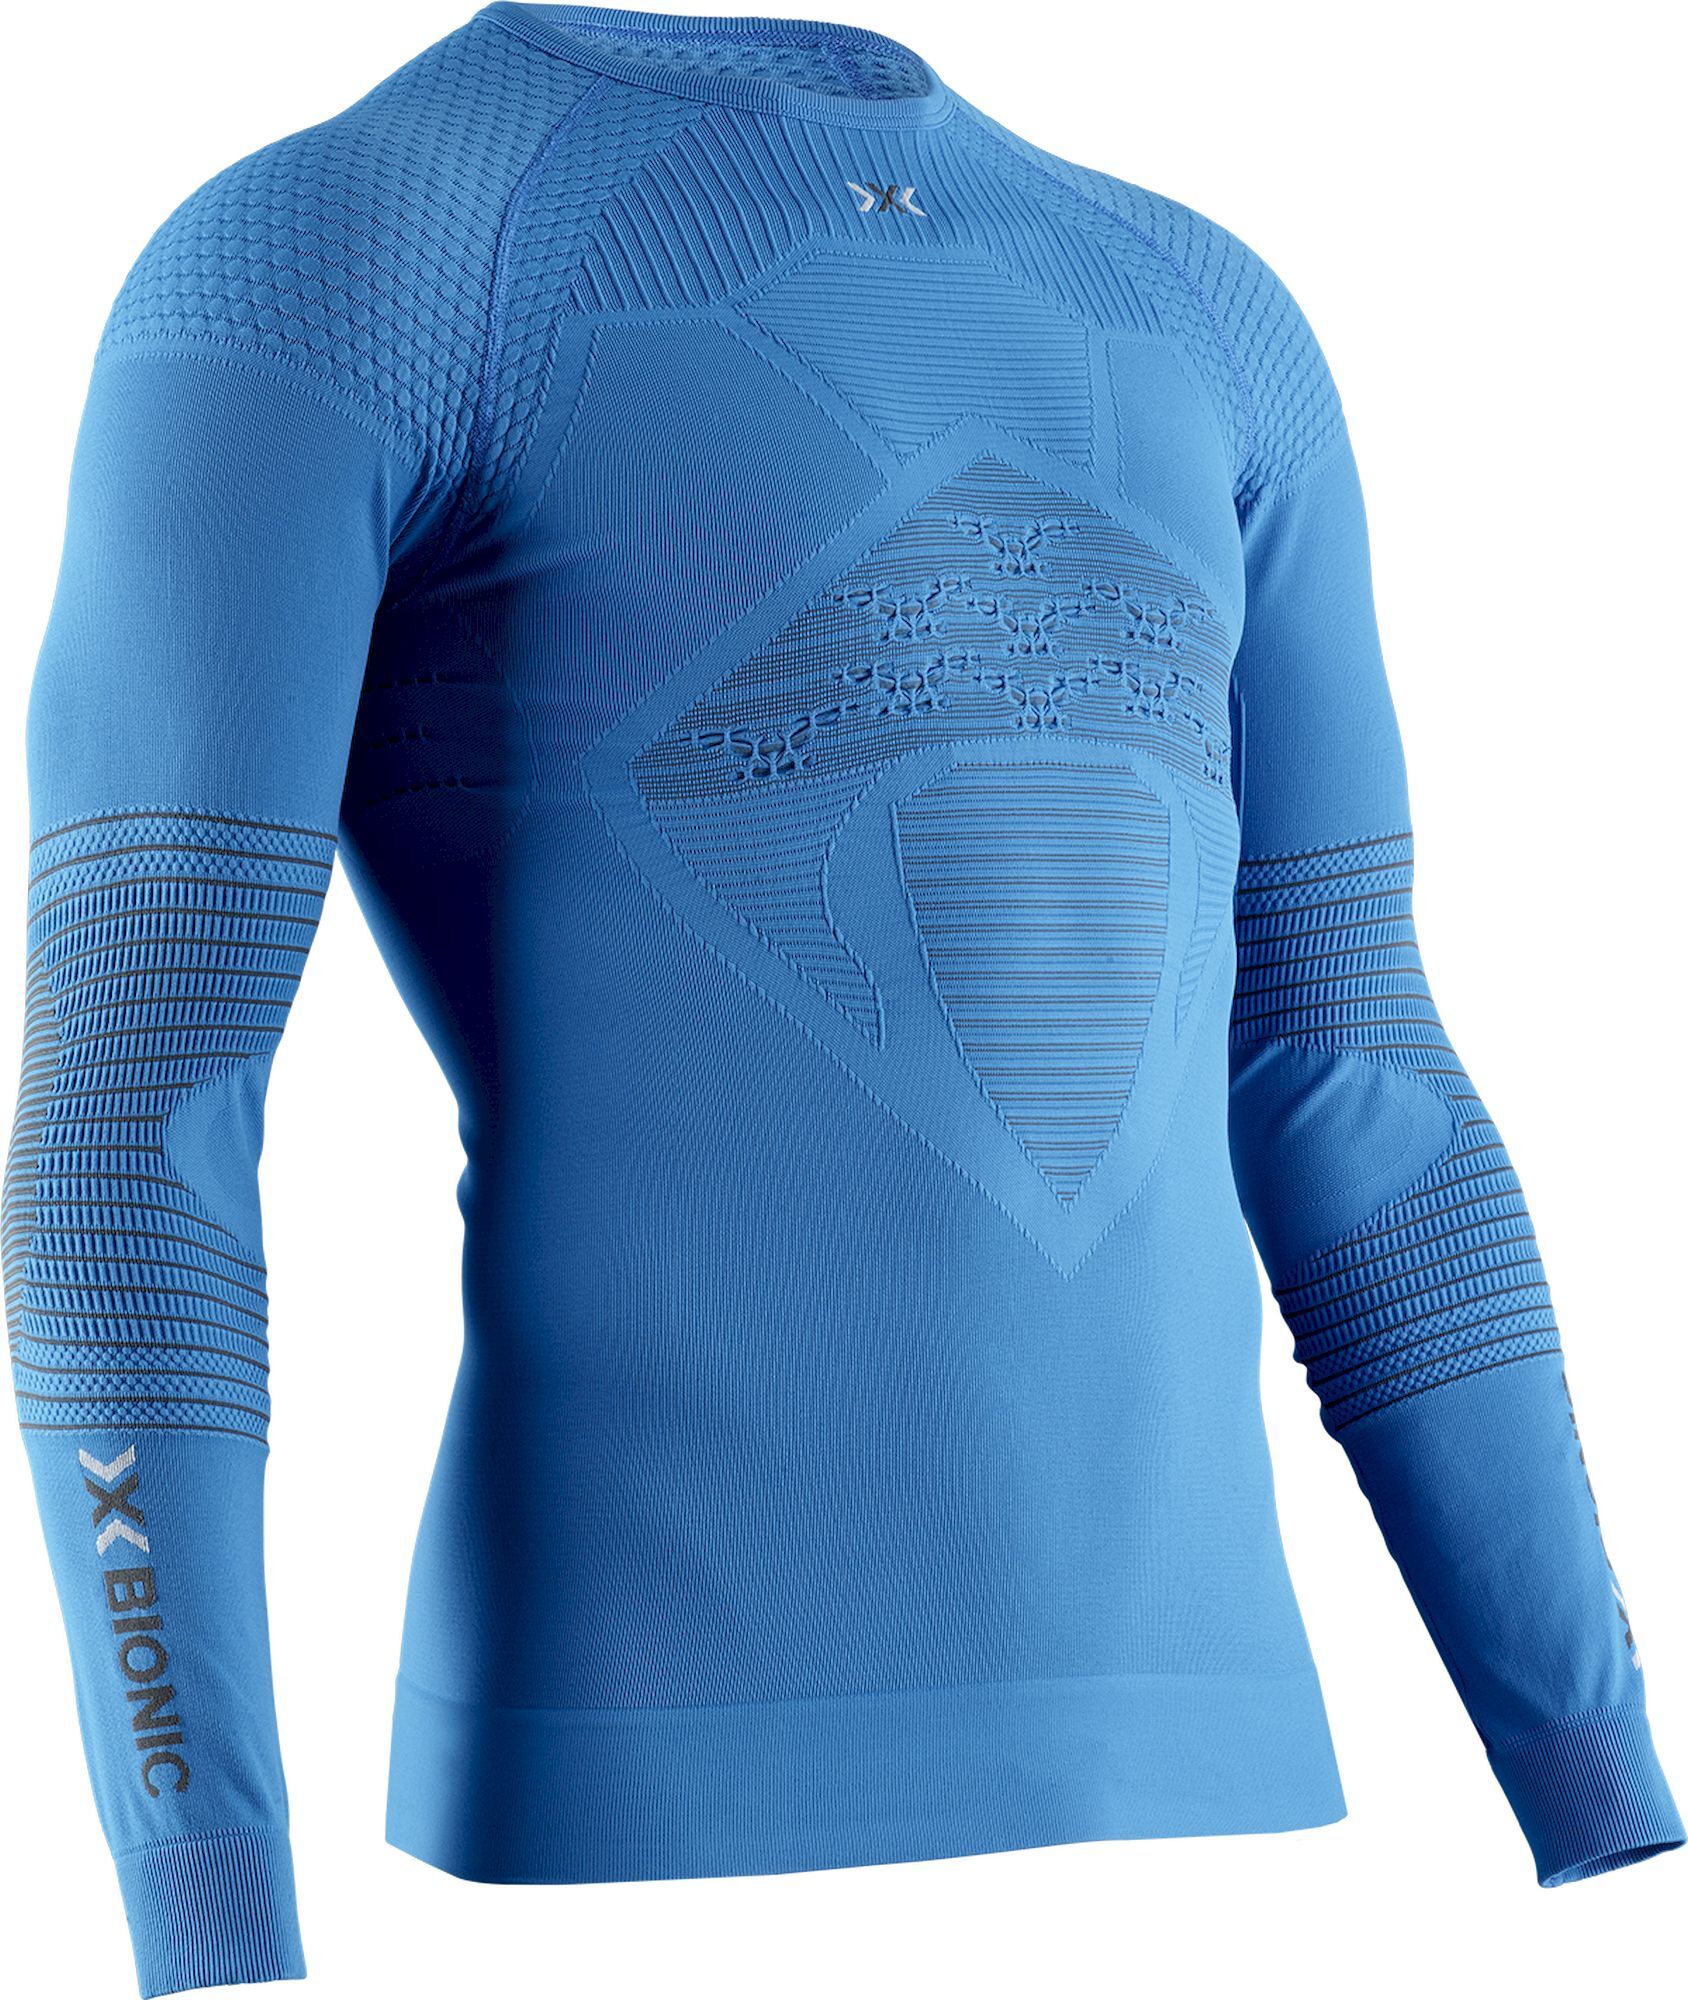 X-Bionic Energizer 4.0 Shirt Long Sleeve - Pánsky Dres